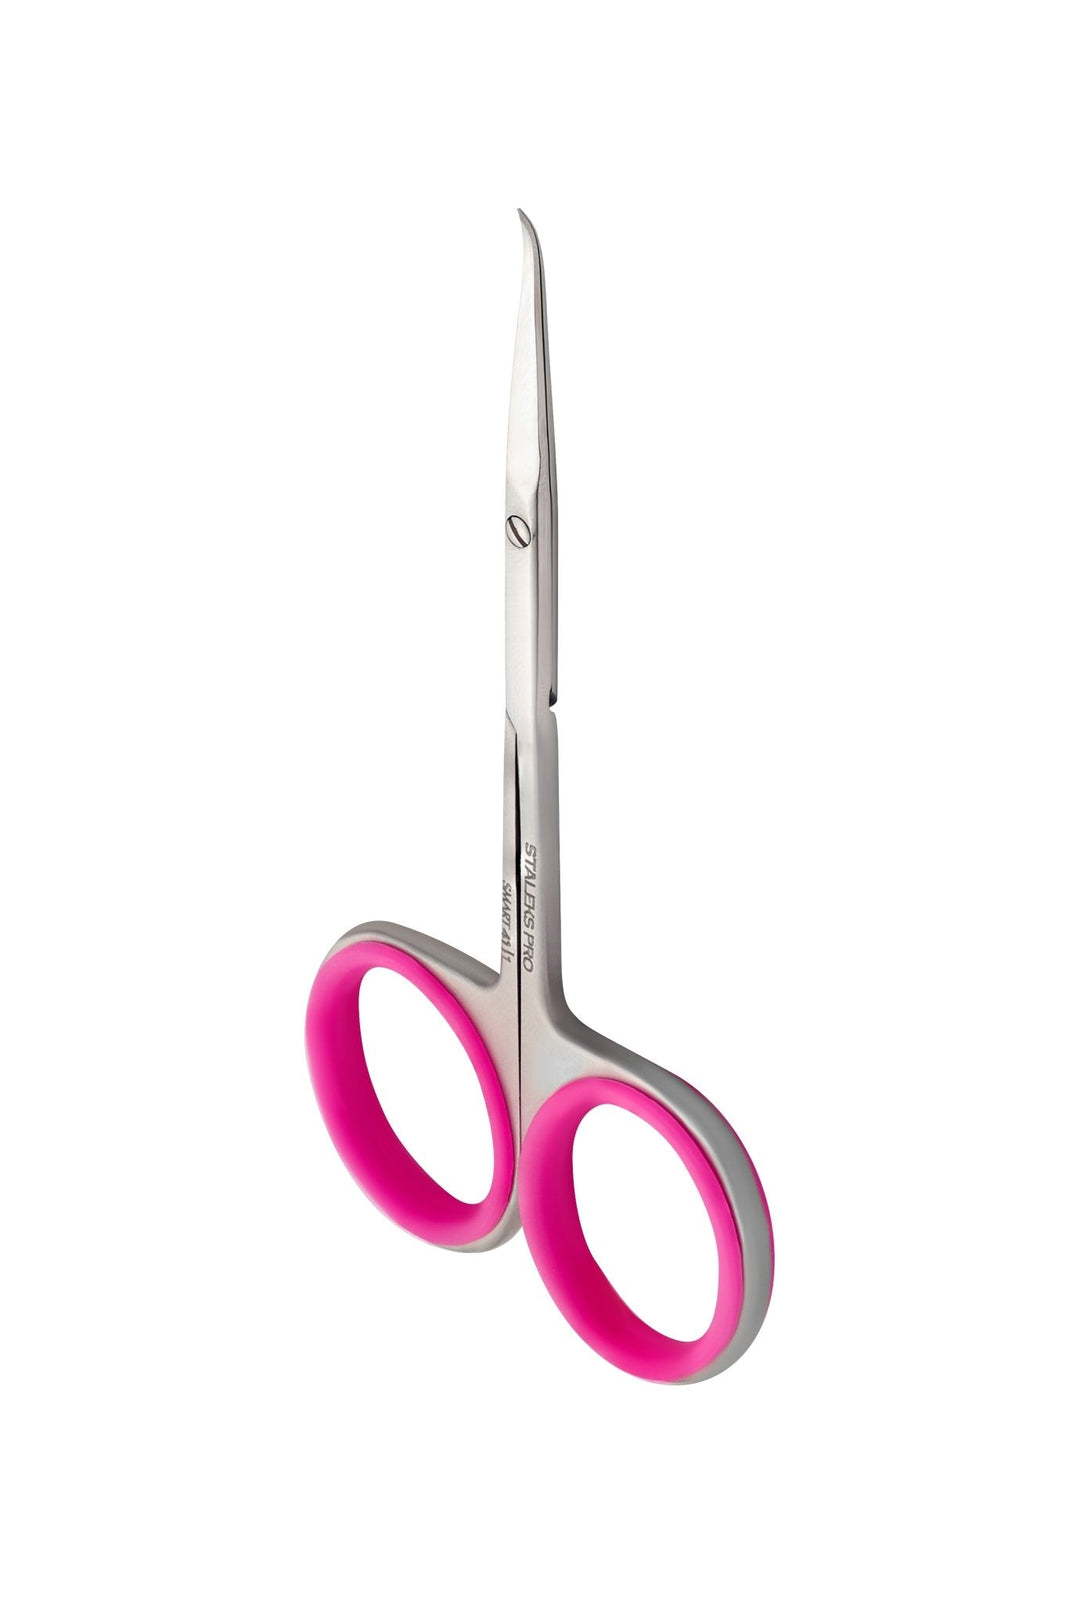 Staleks Pro Cuticle Scissors Smart 41 Type 3 — 24 mm blades | U-tools